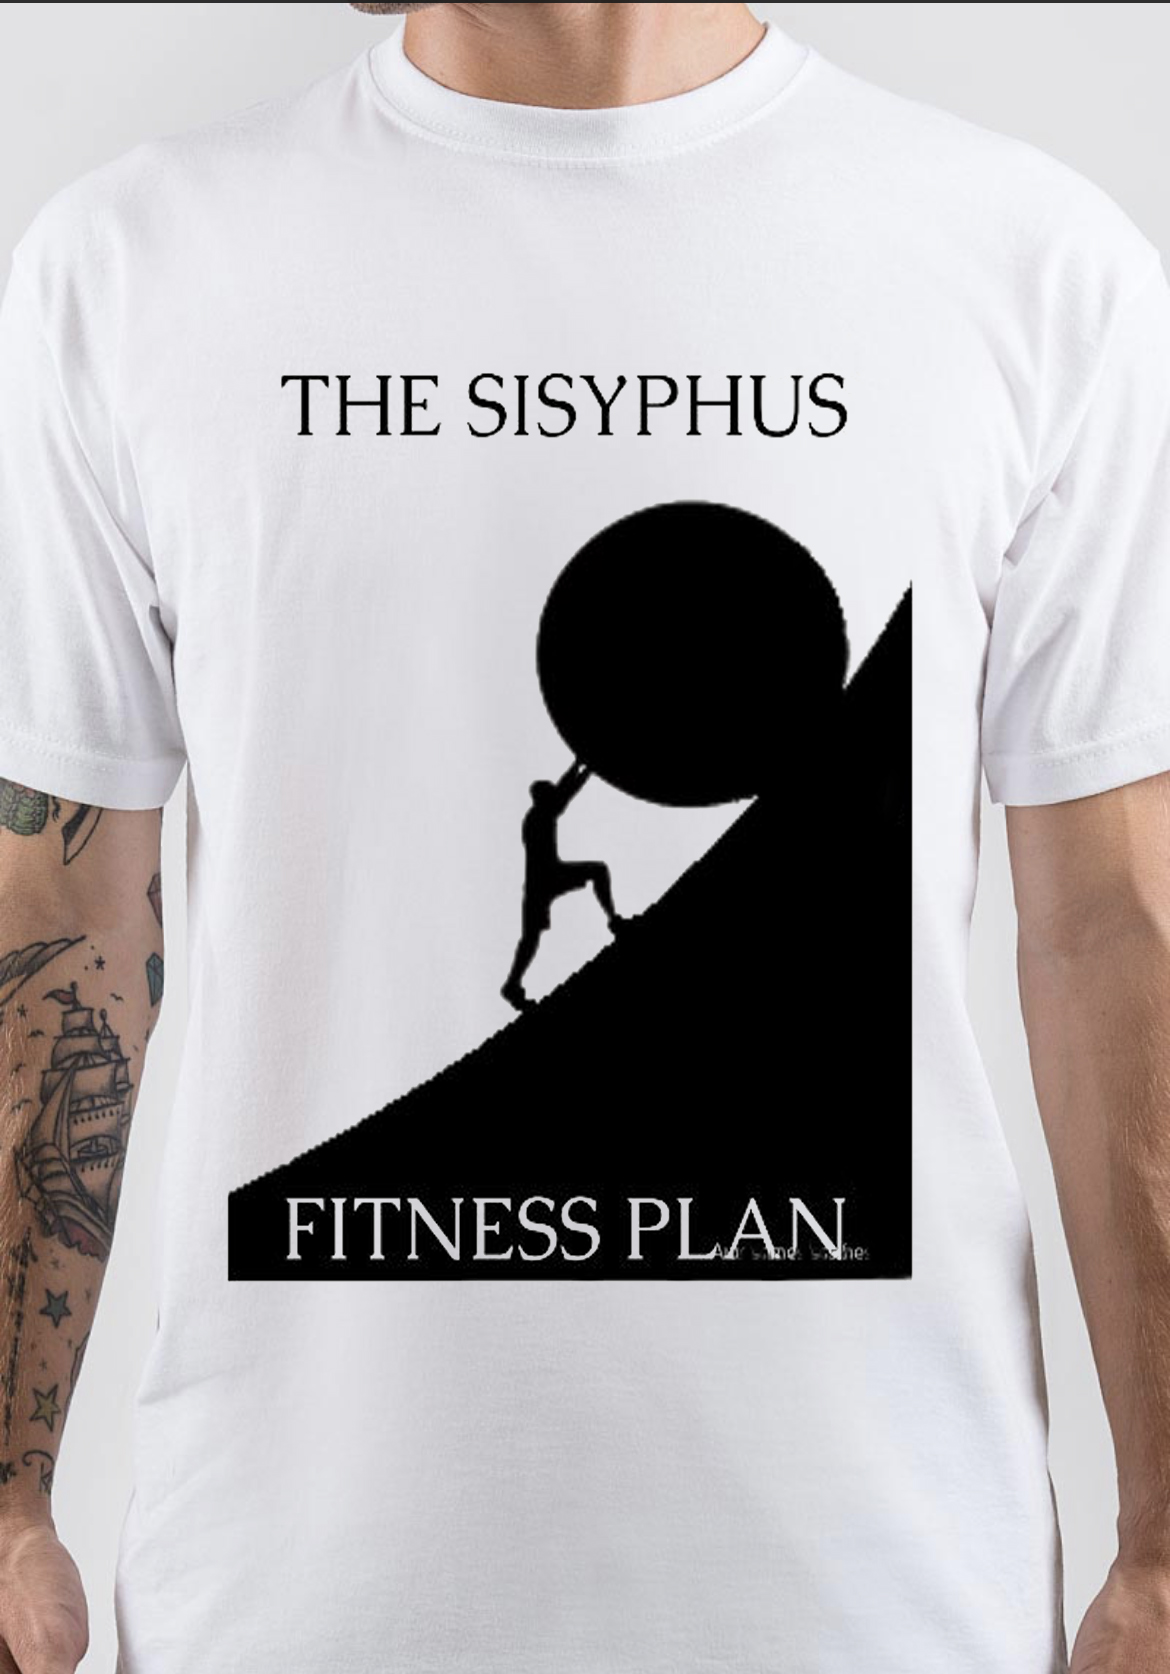 Sisyphus Happy T-Shirt And Merchandise